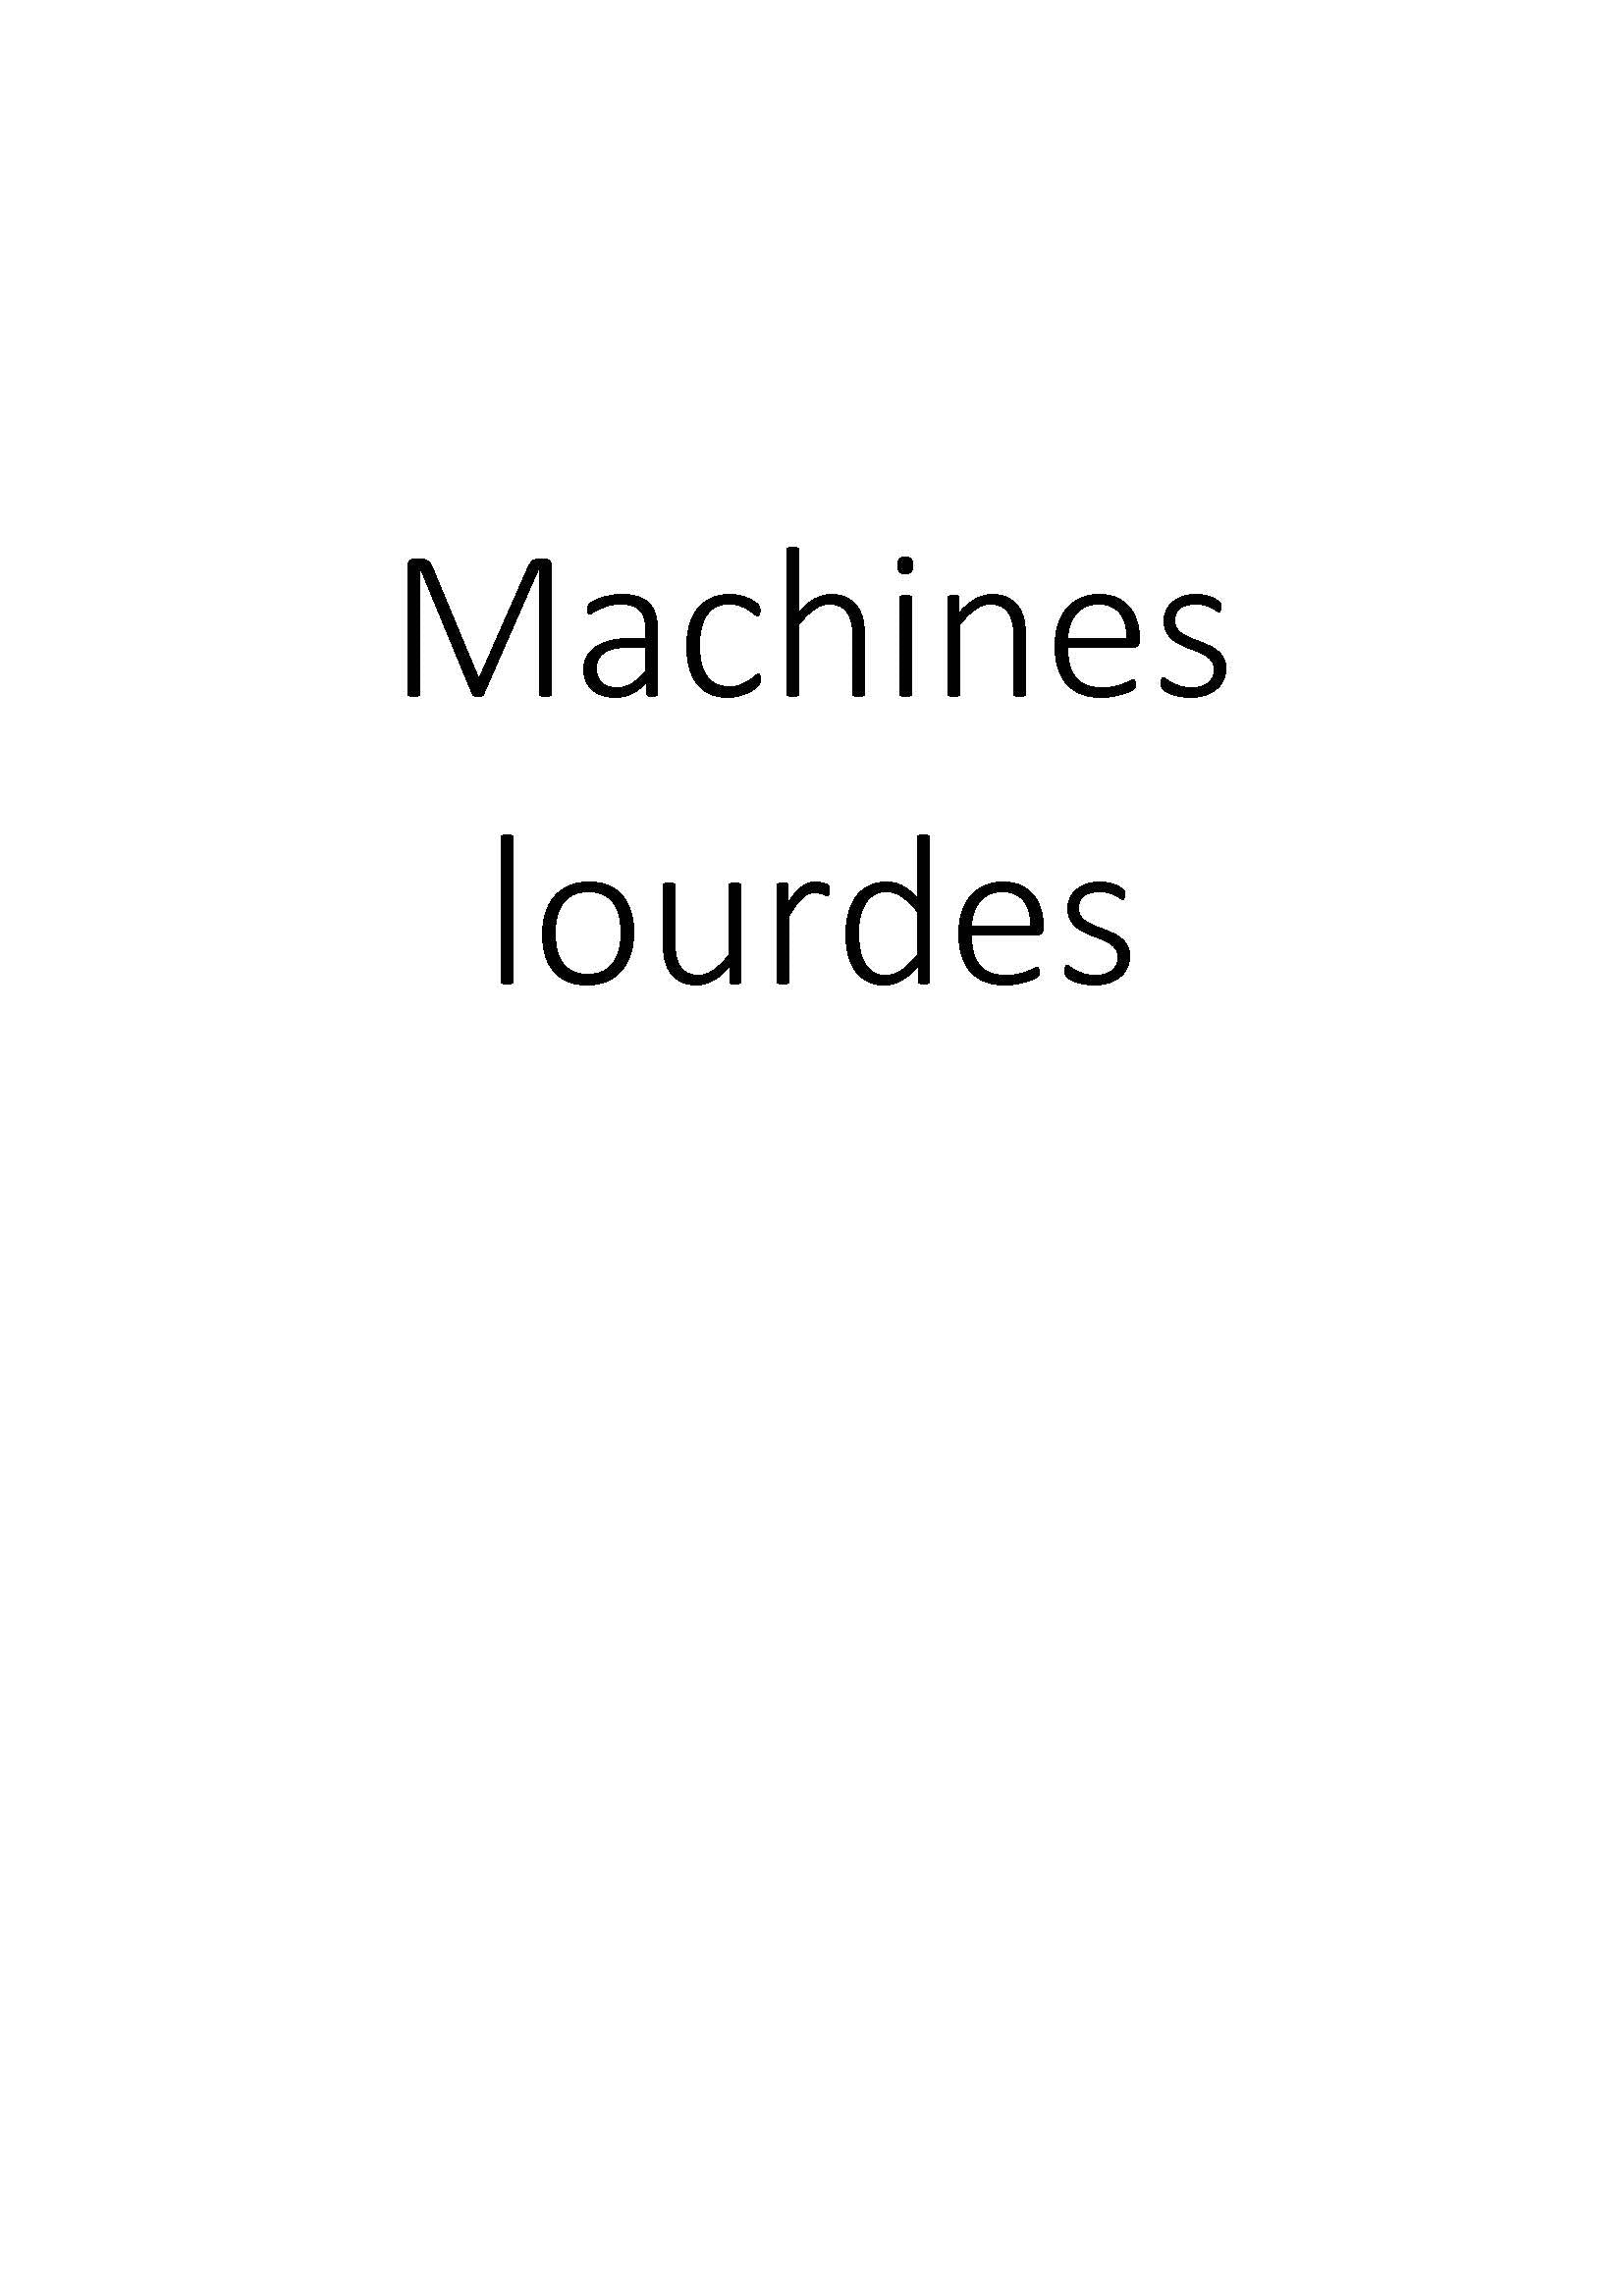 Machines lourdes clicktofournisseur.com